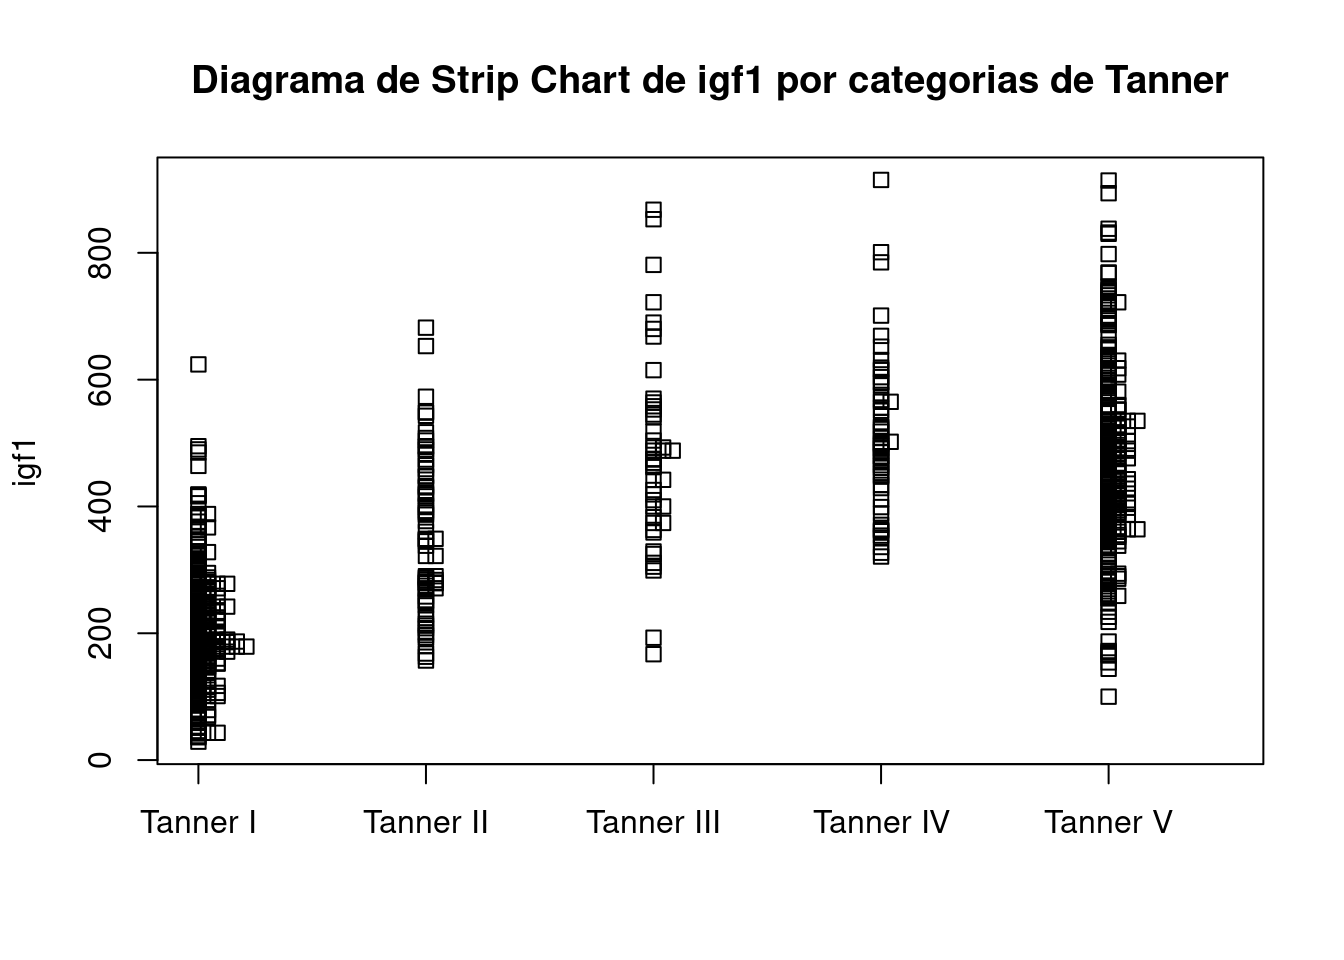 Diagrama de strip chart de igf1 para cada categoria de Tanner.